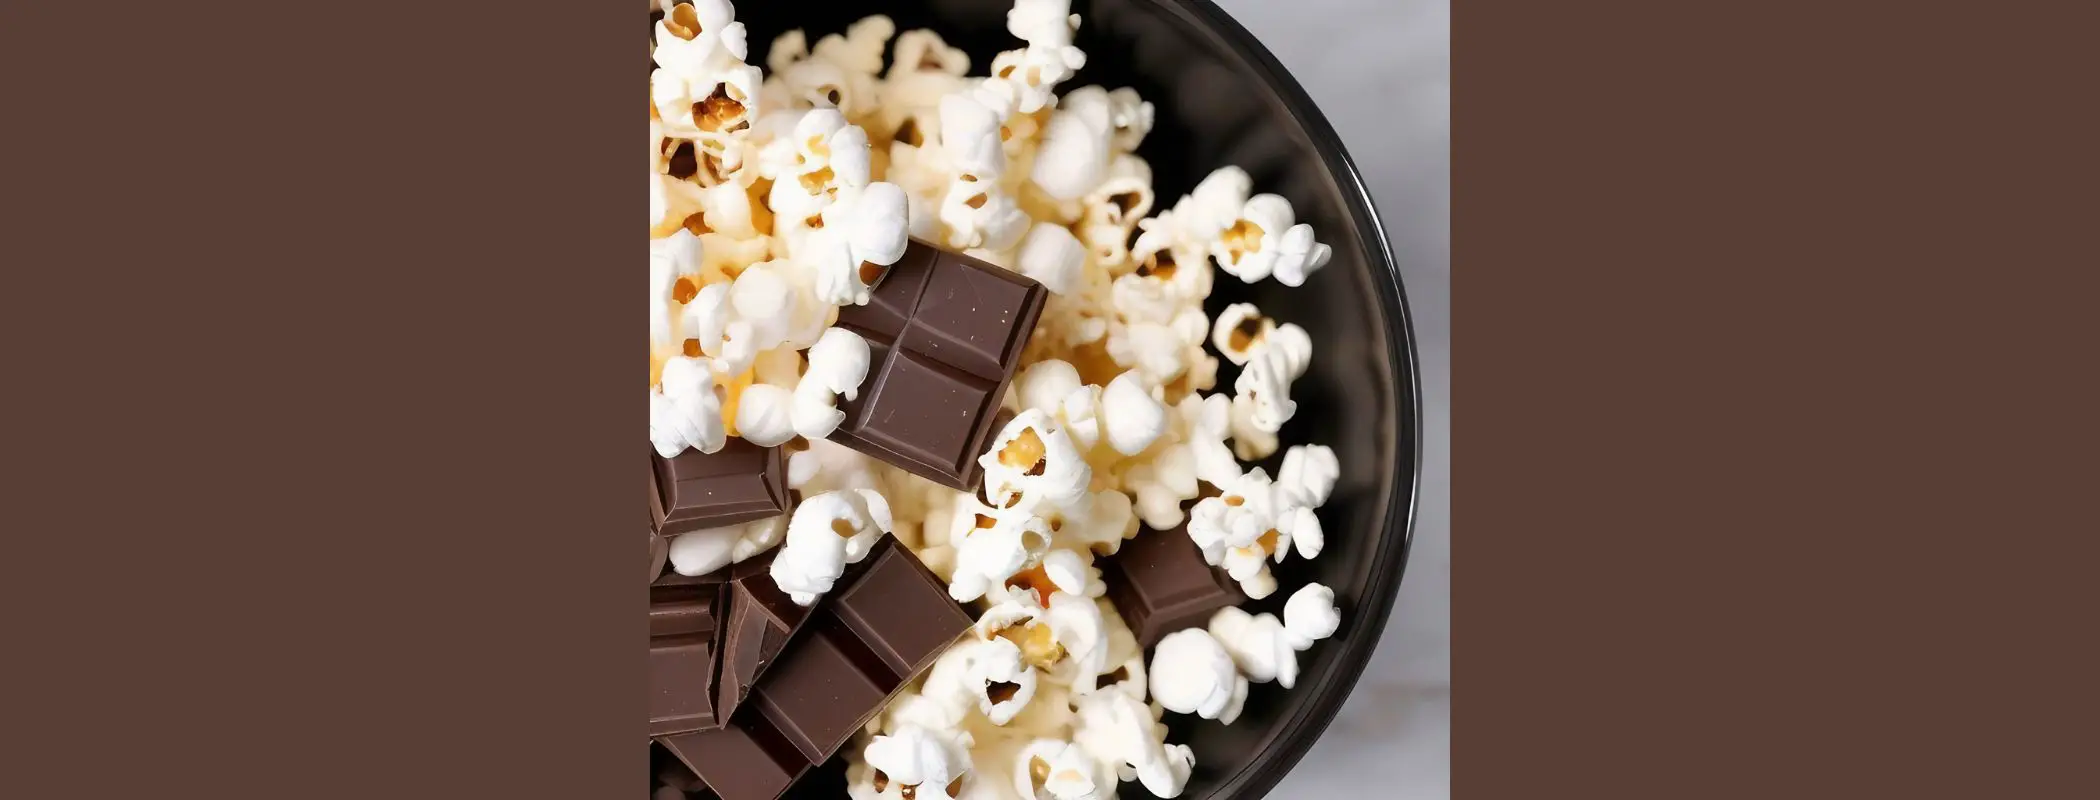 Delicious Popcorn Mix In Ideas